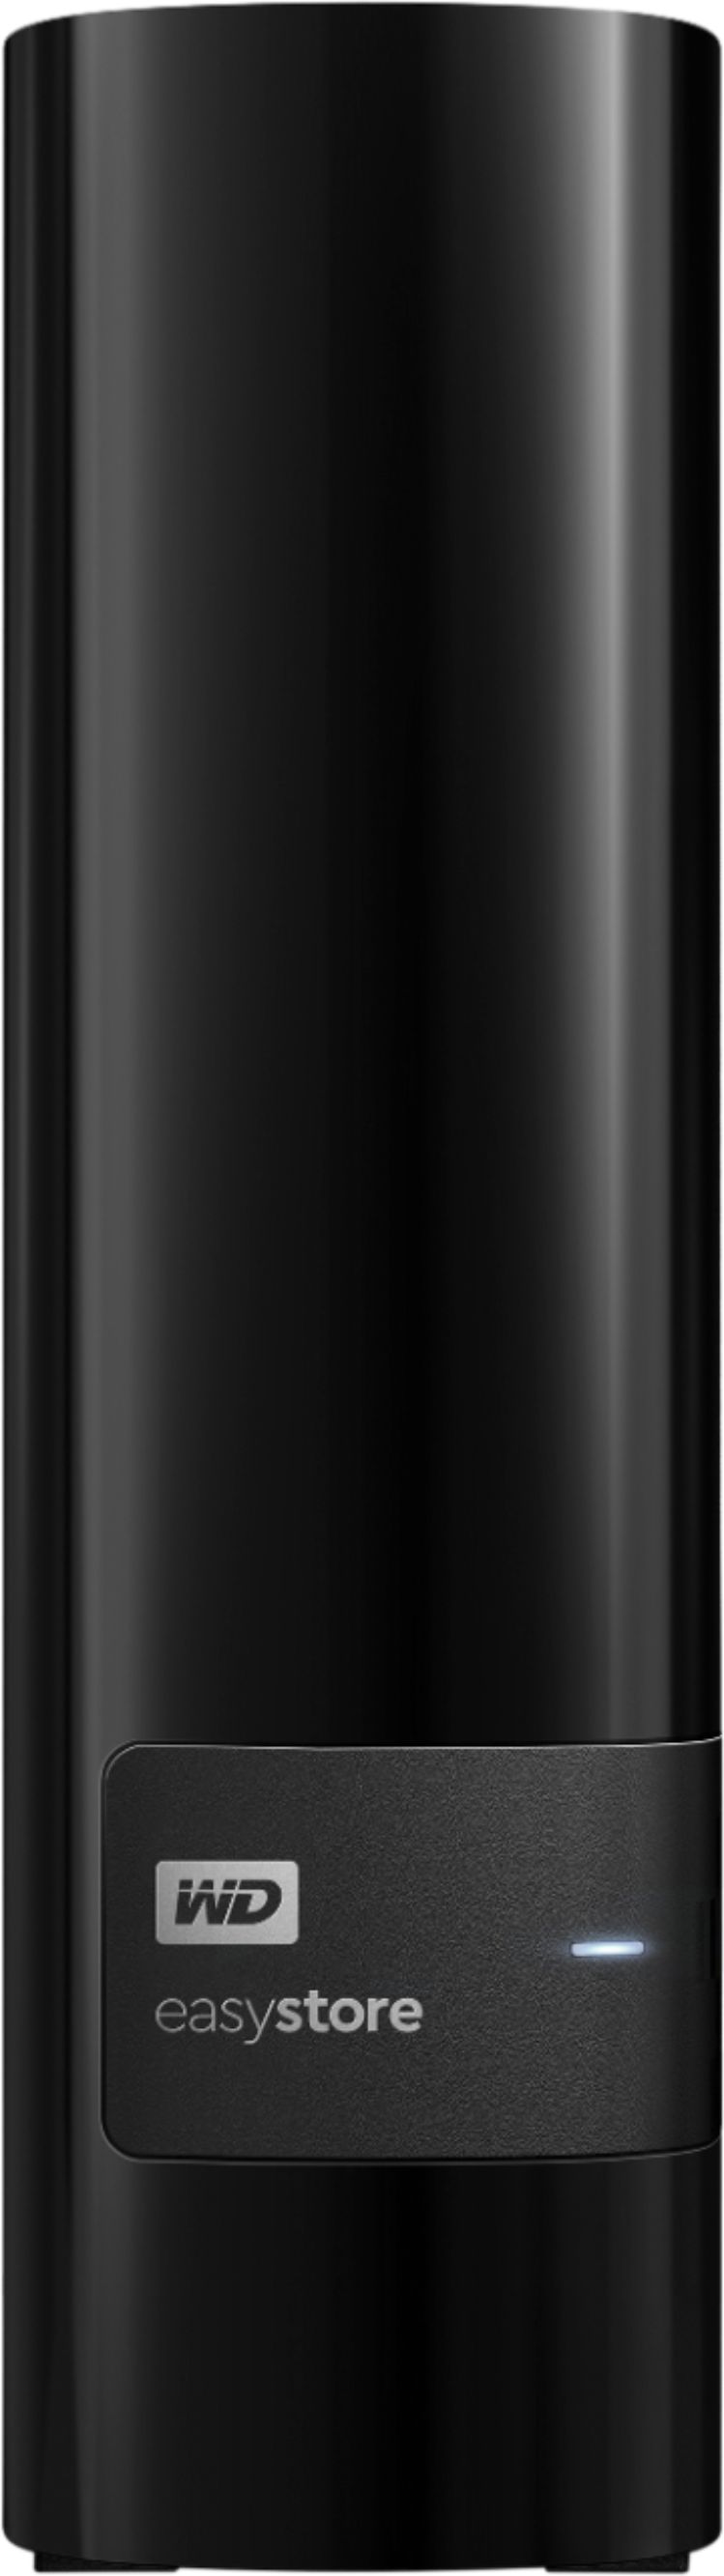 Best Buy: WD easystore 8TB External USB 3.0 Hard Drive Black 